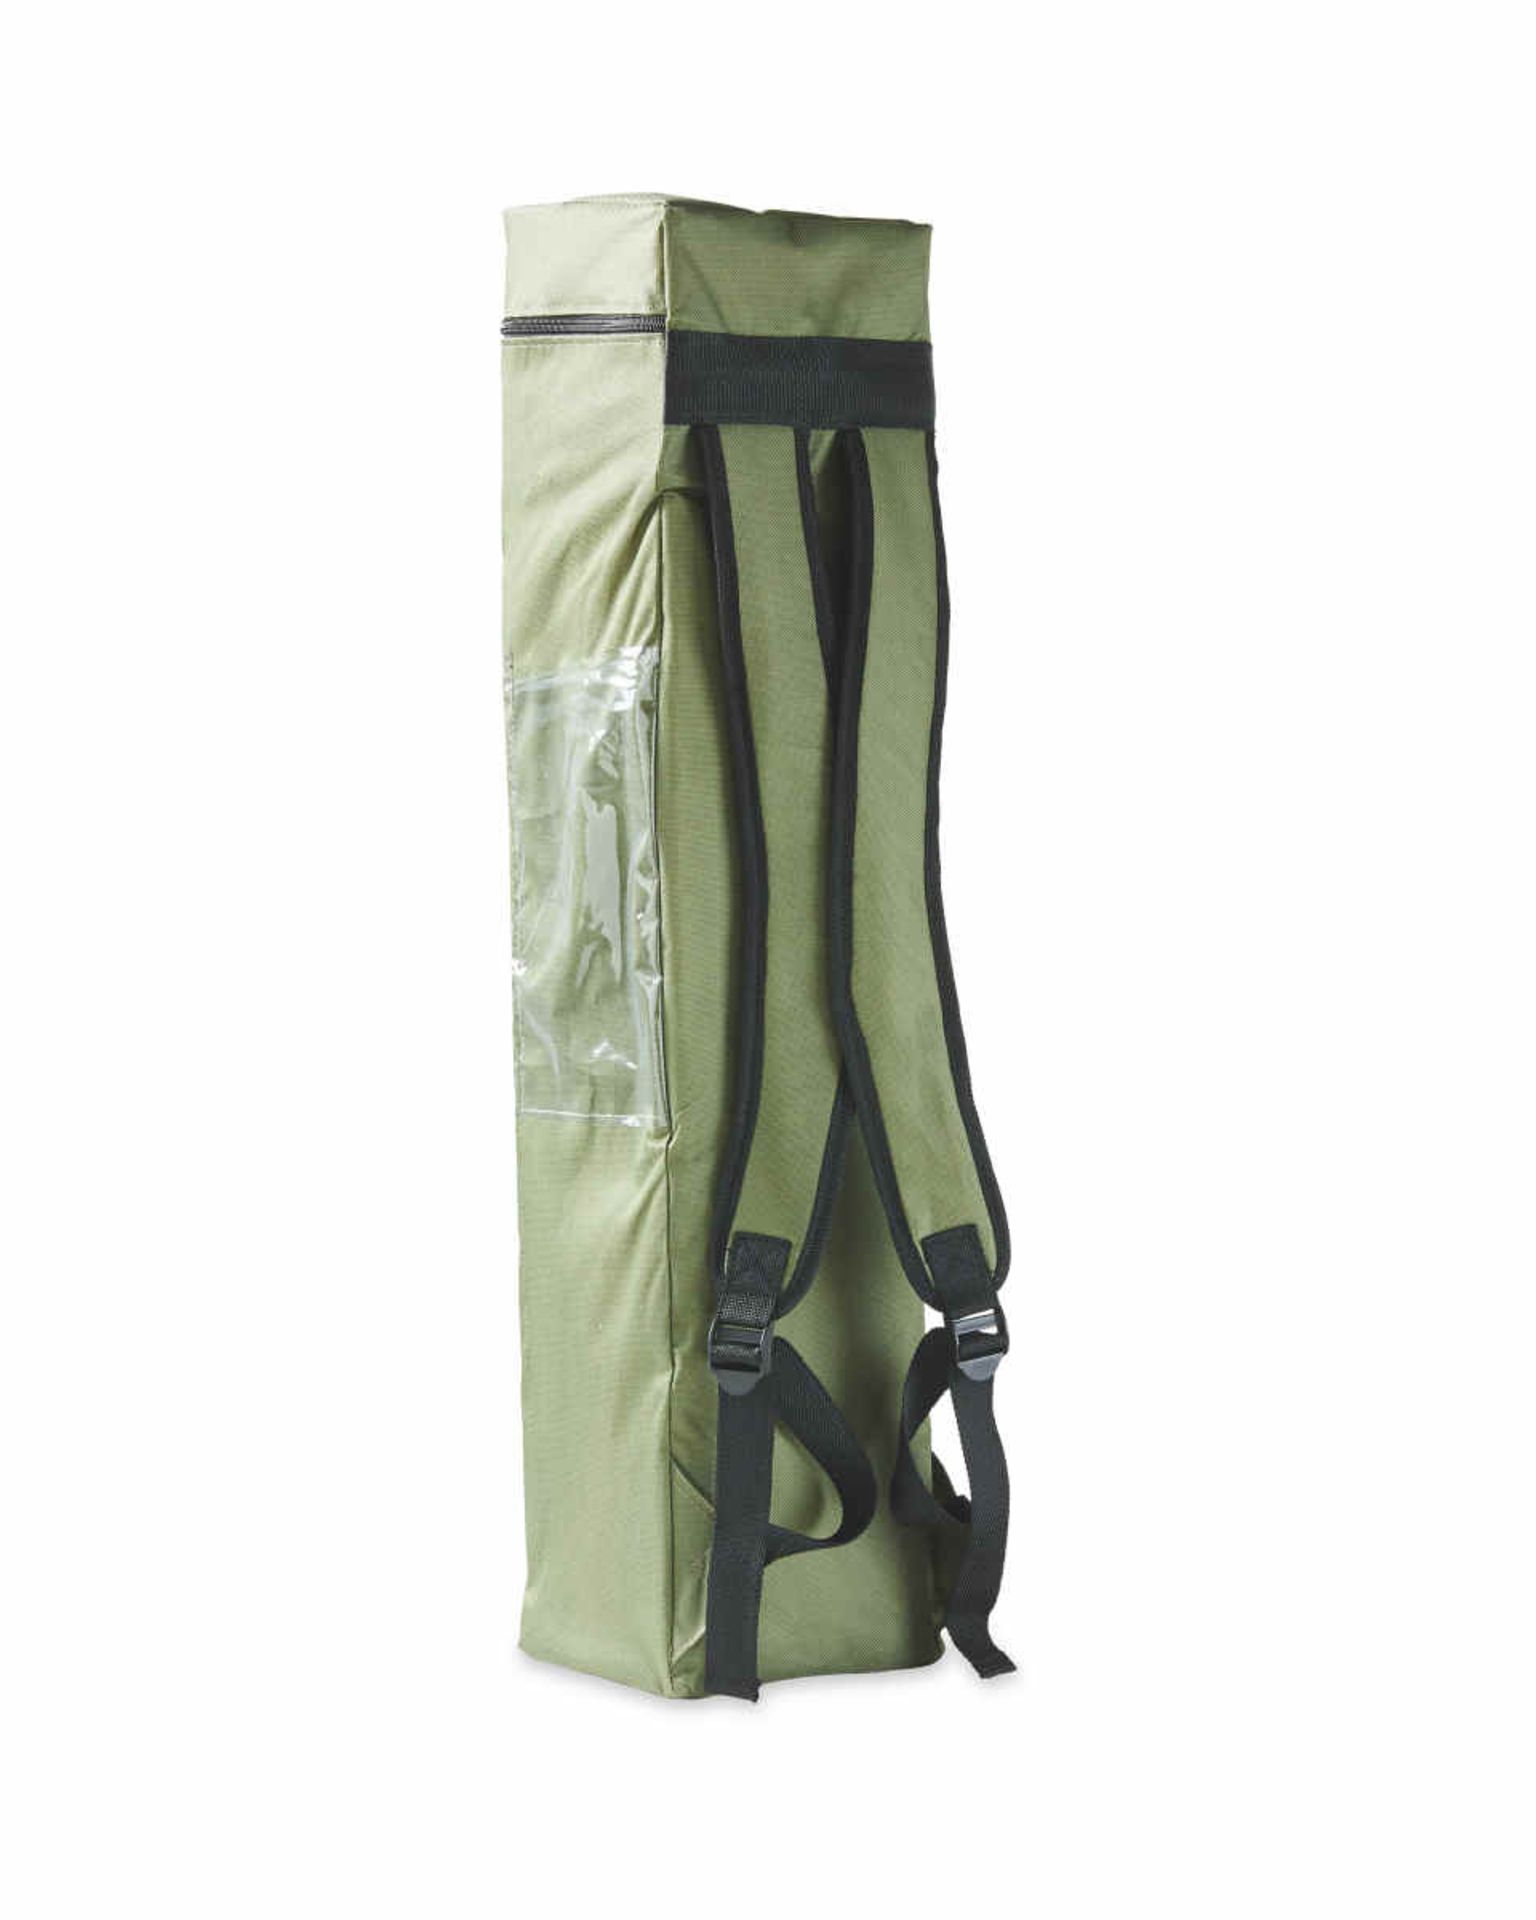 Backpack Gazebo. ROW7. Take cover with this handy Adventuridge Backpack Gazebo. It's lightweight, - Image 2 of 2